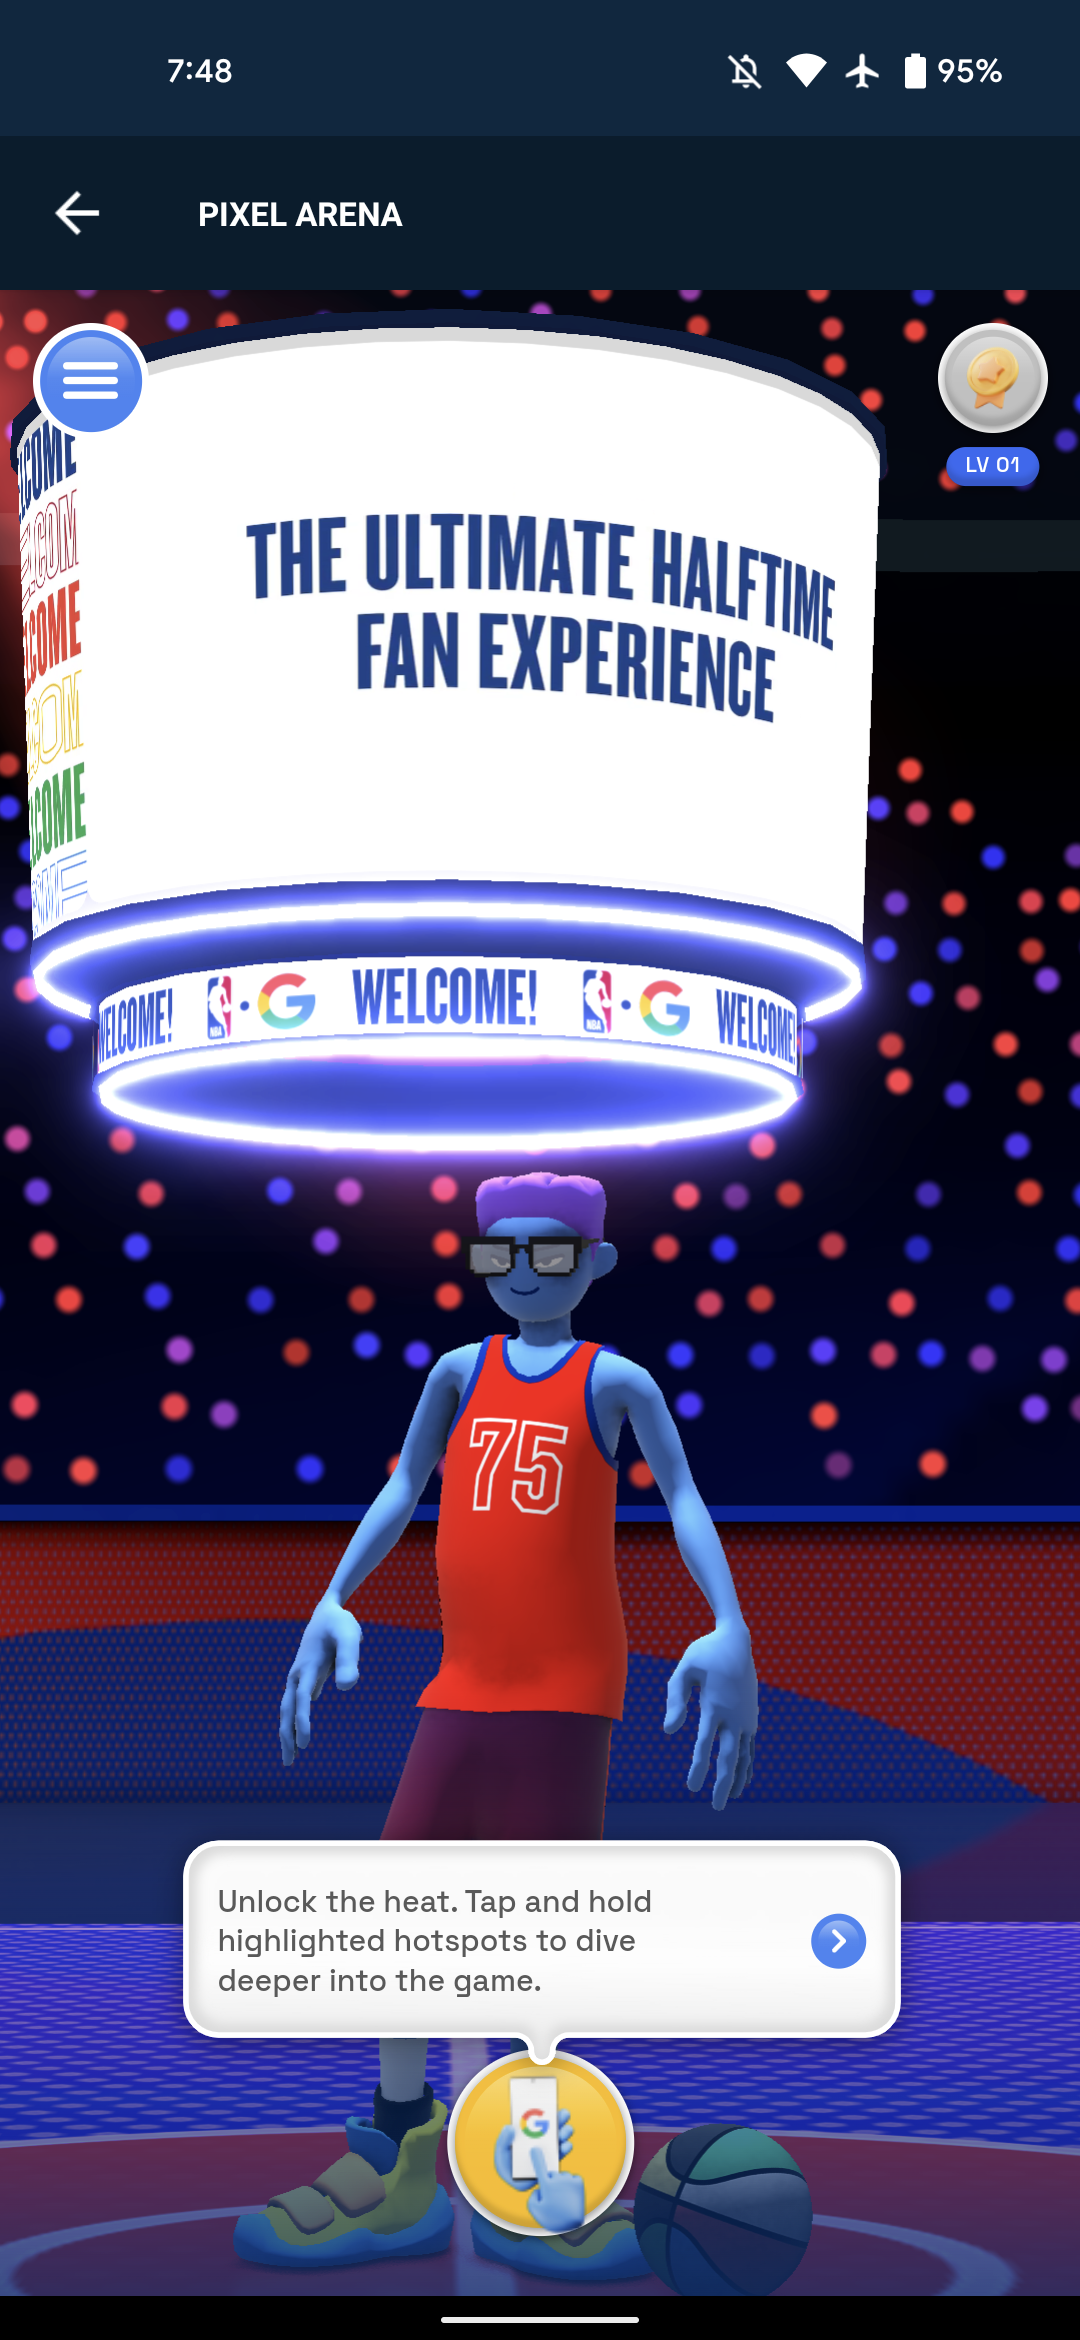 Google NBA Pixel Arena